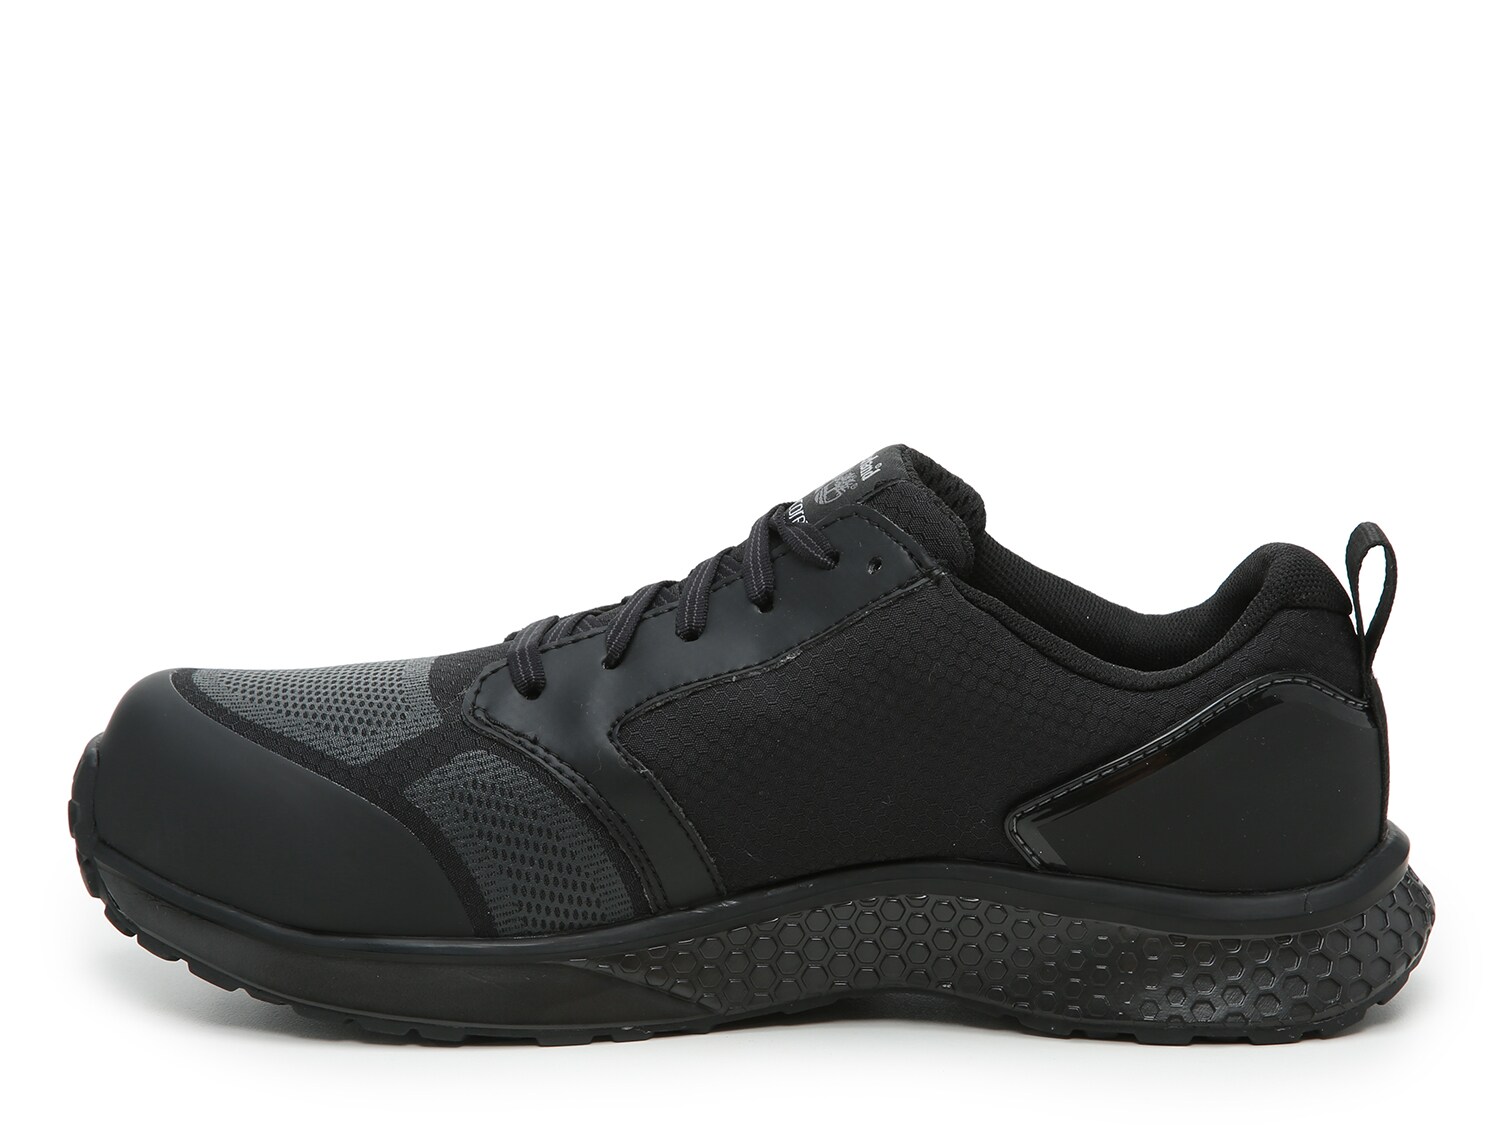 Timberland PRO Reaxion Composite Toe Work Sneaker - Men's | DSW